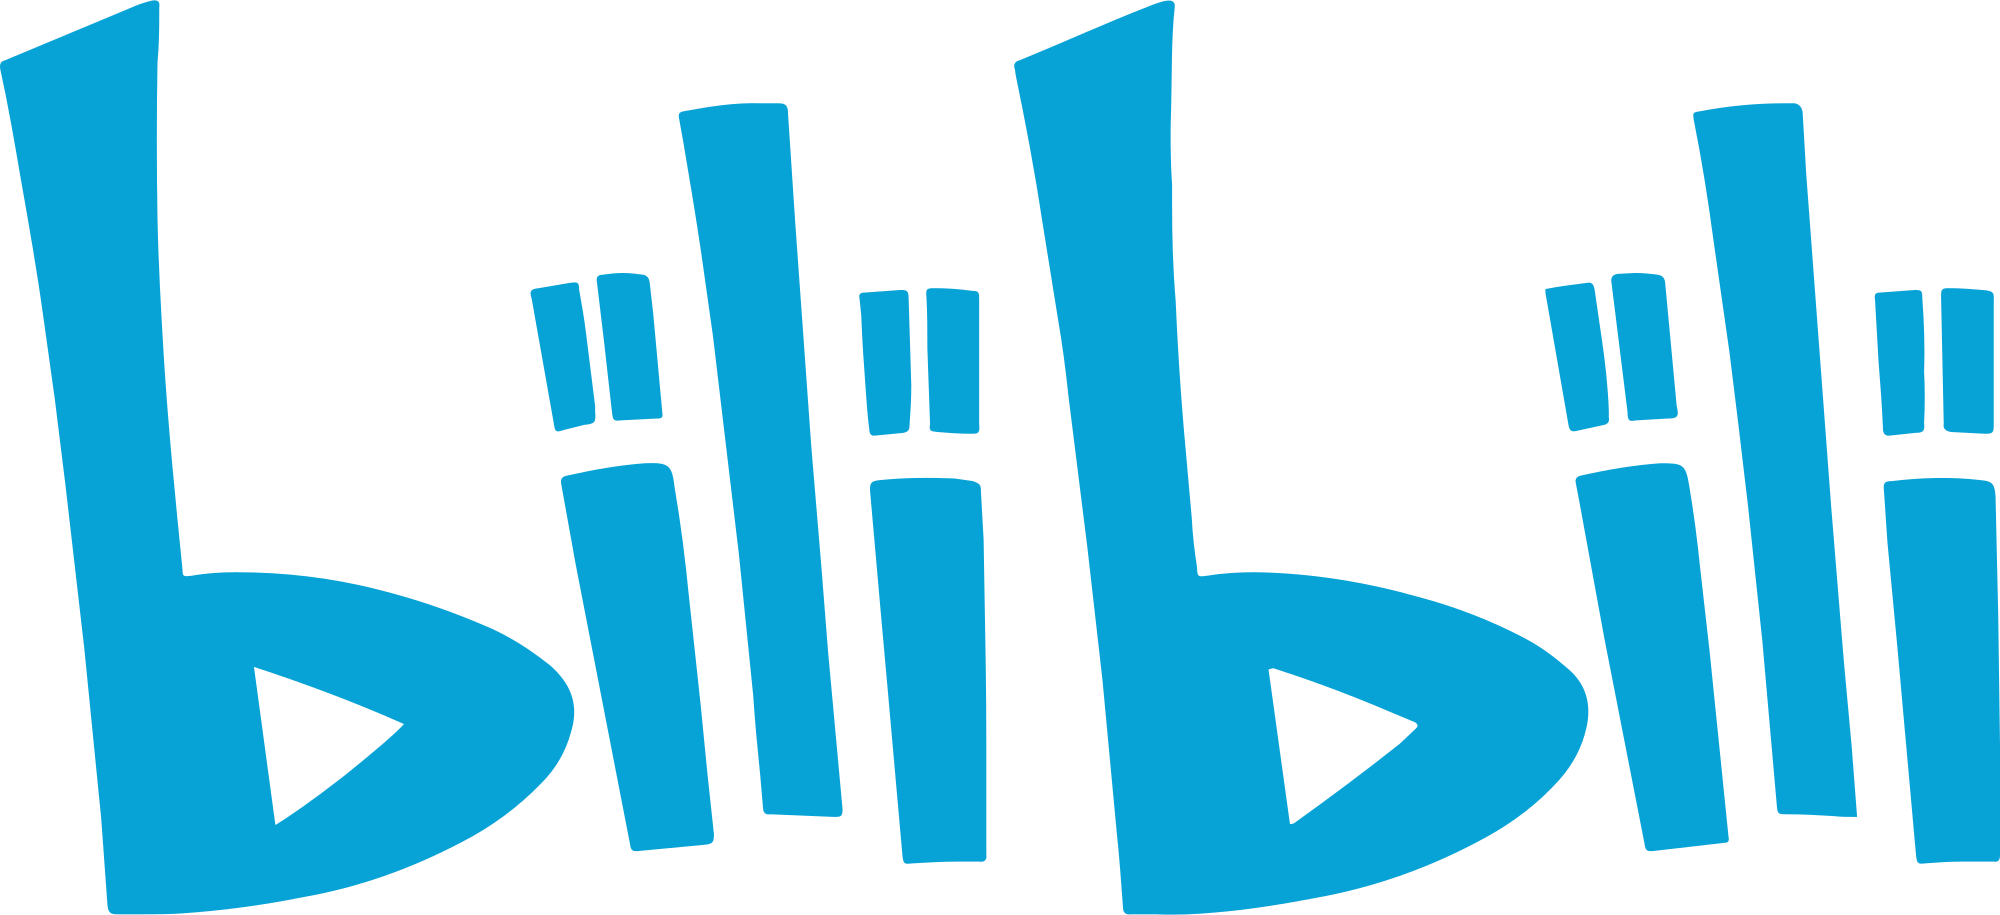 bilibili - company